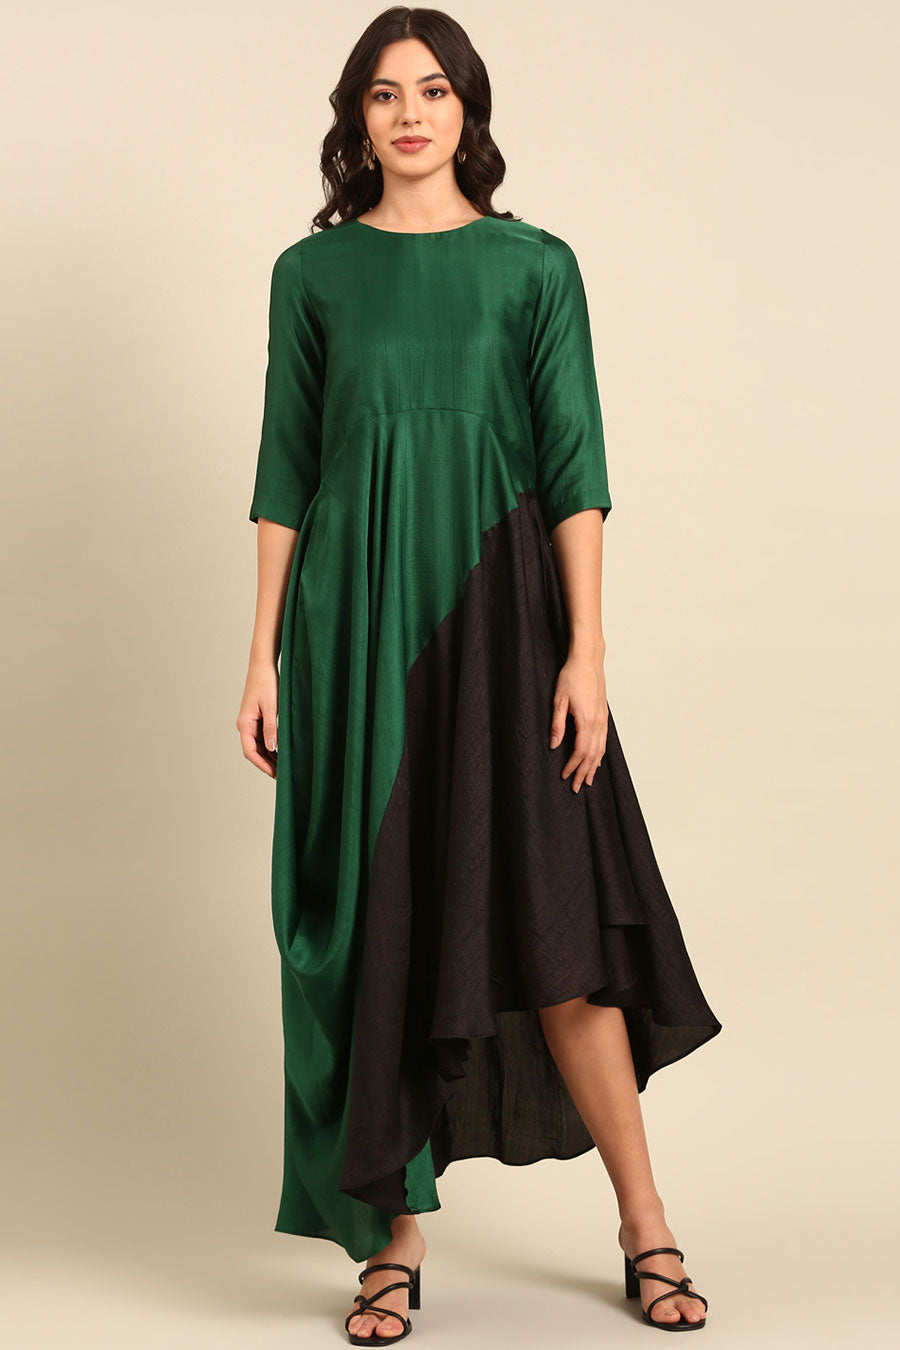 Green & Black Asymmetric Dress